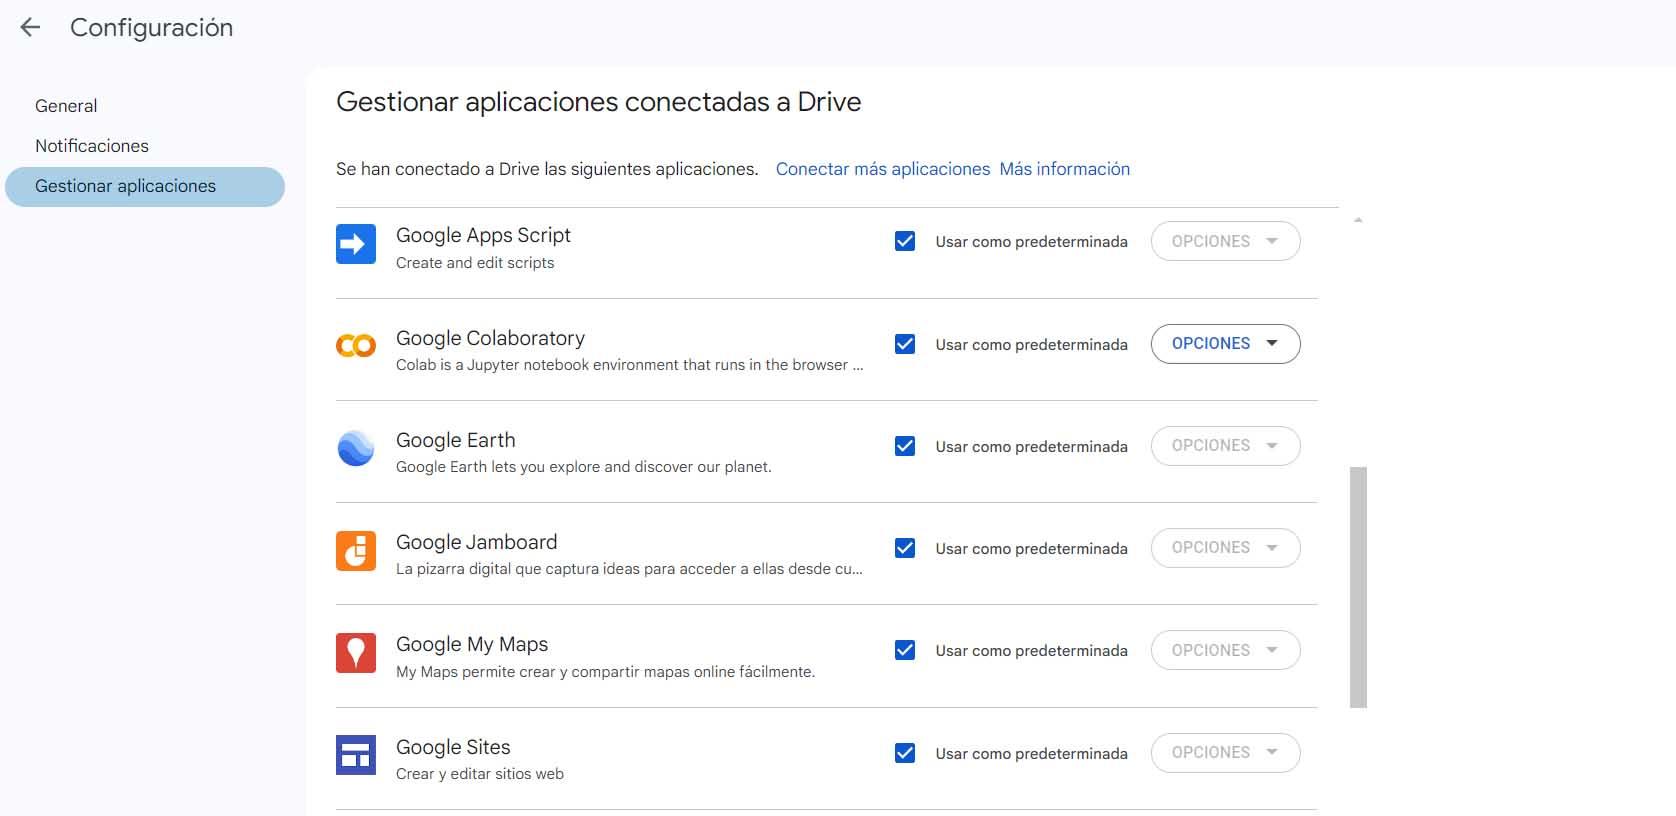 Ver aplicaciones vinculadas a Google Drive